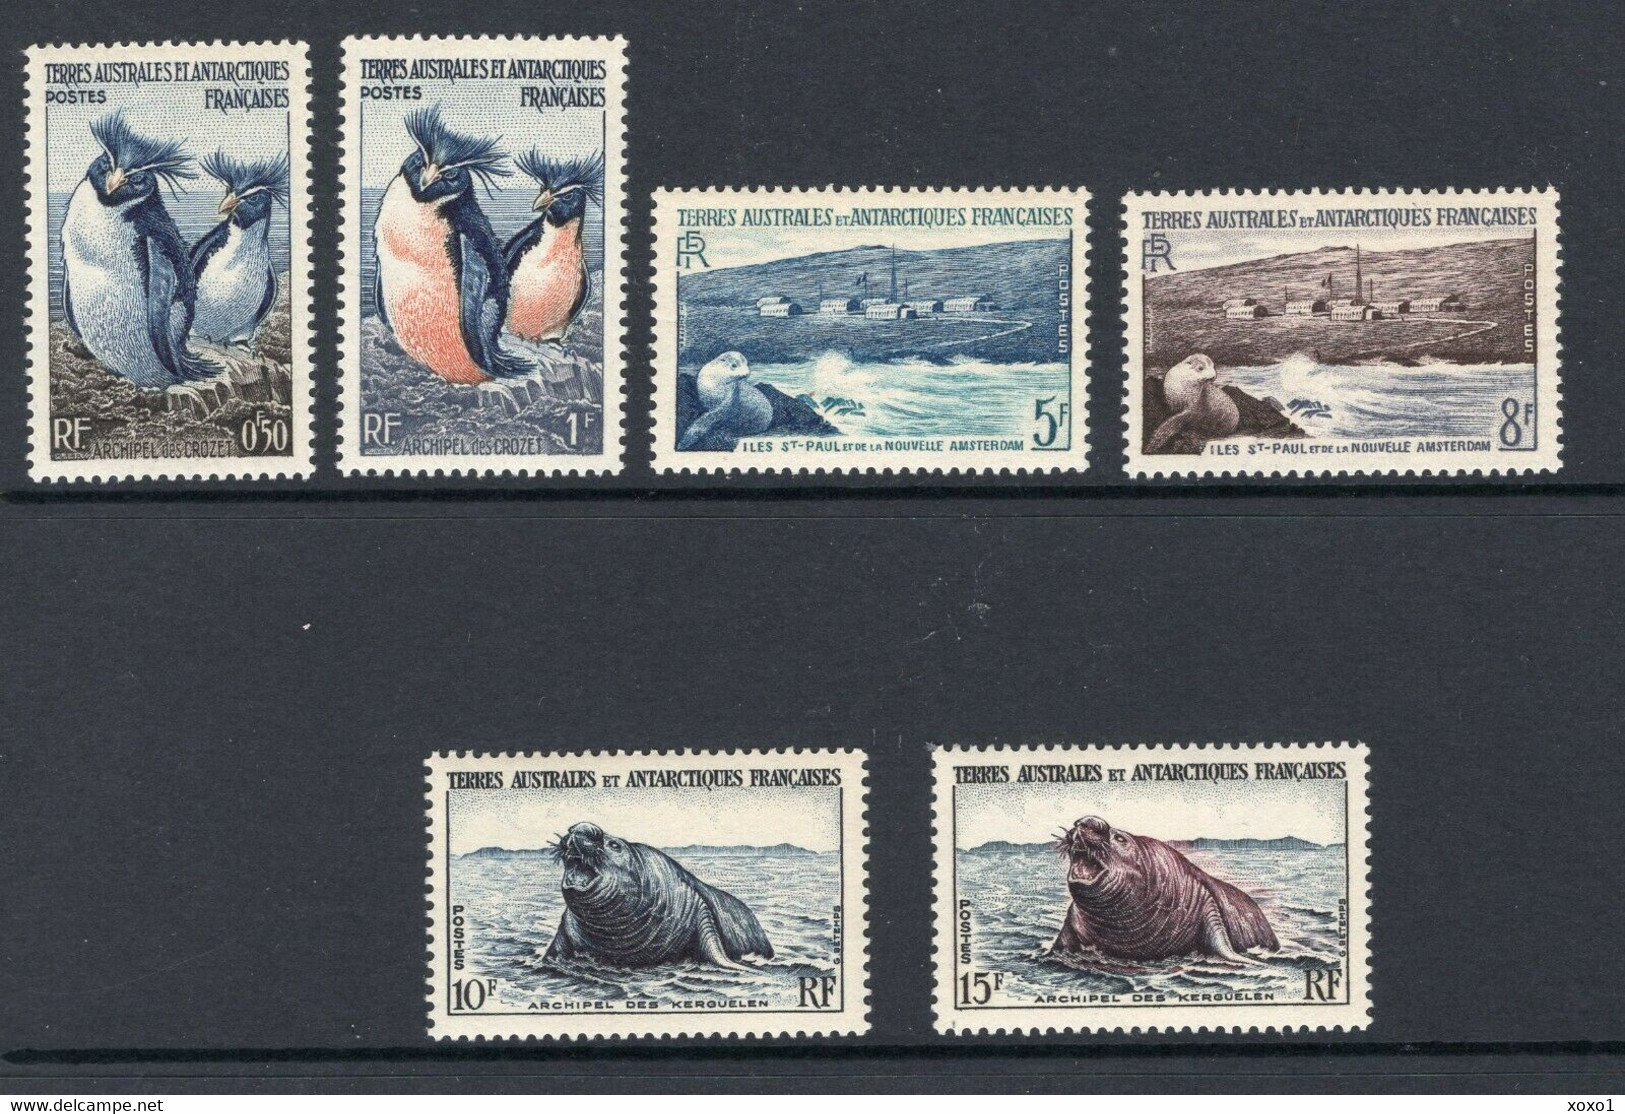 TAAF 1956  Mi.No. 2 - 7  Fr. Antarktis  Antarctic Wildlife BIRDS ANIMALS 6v MNH** 40,00 € - Antarctic Wildlife